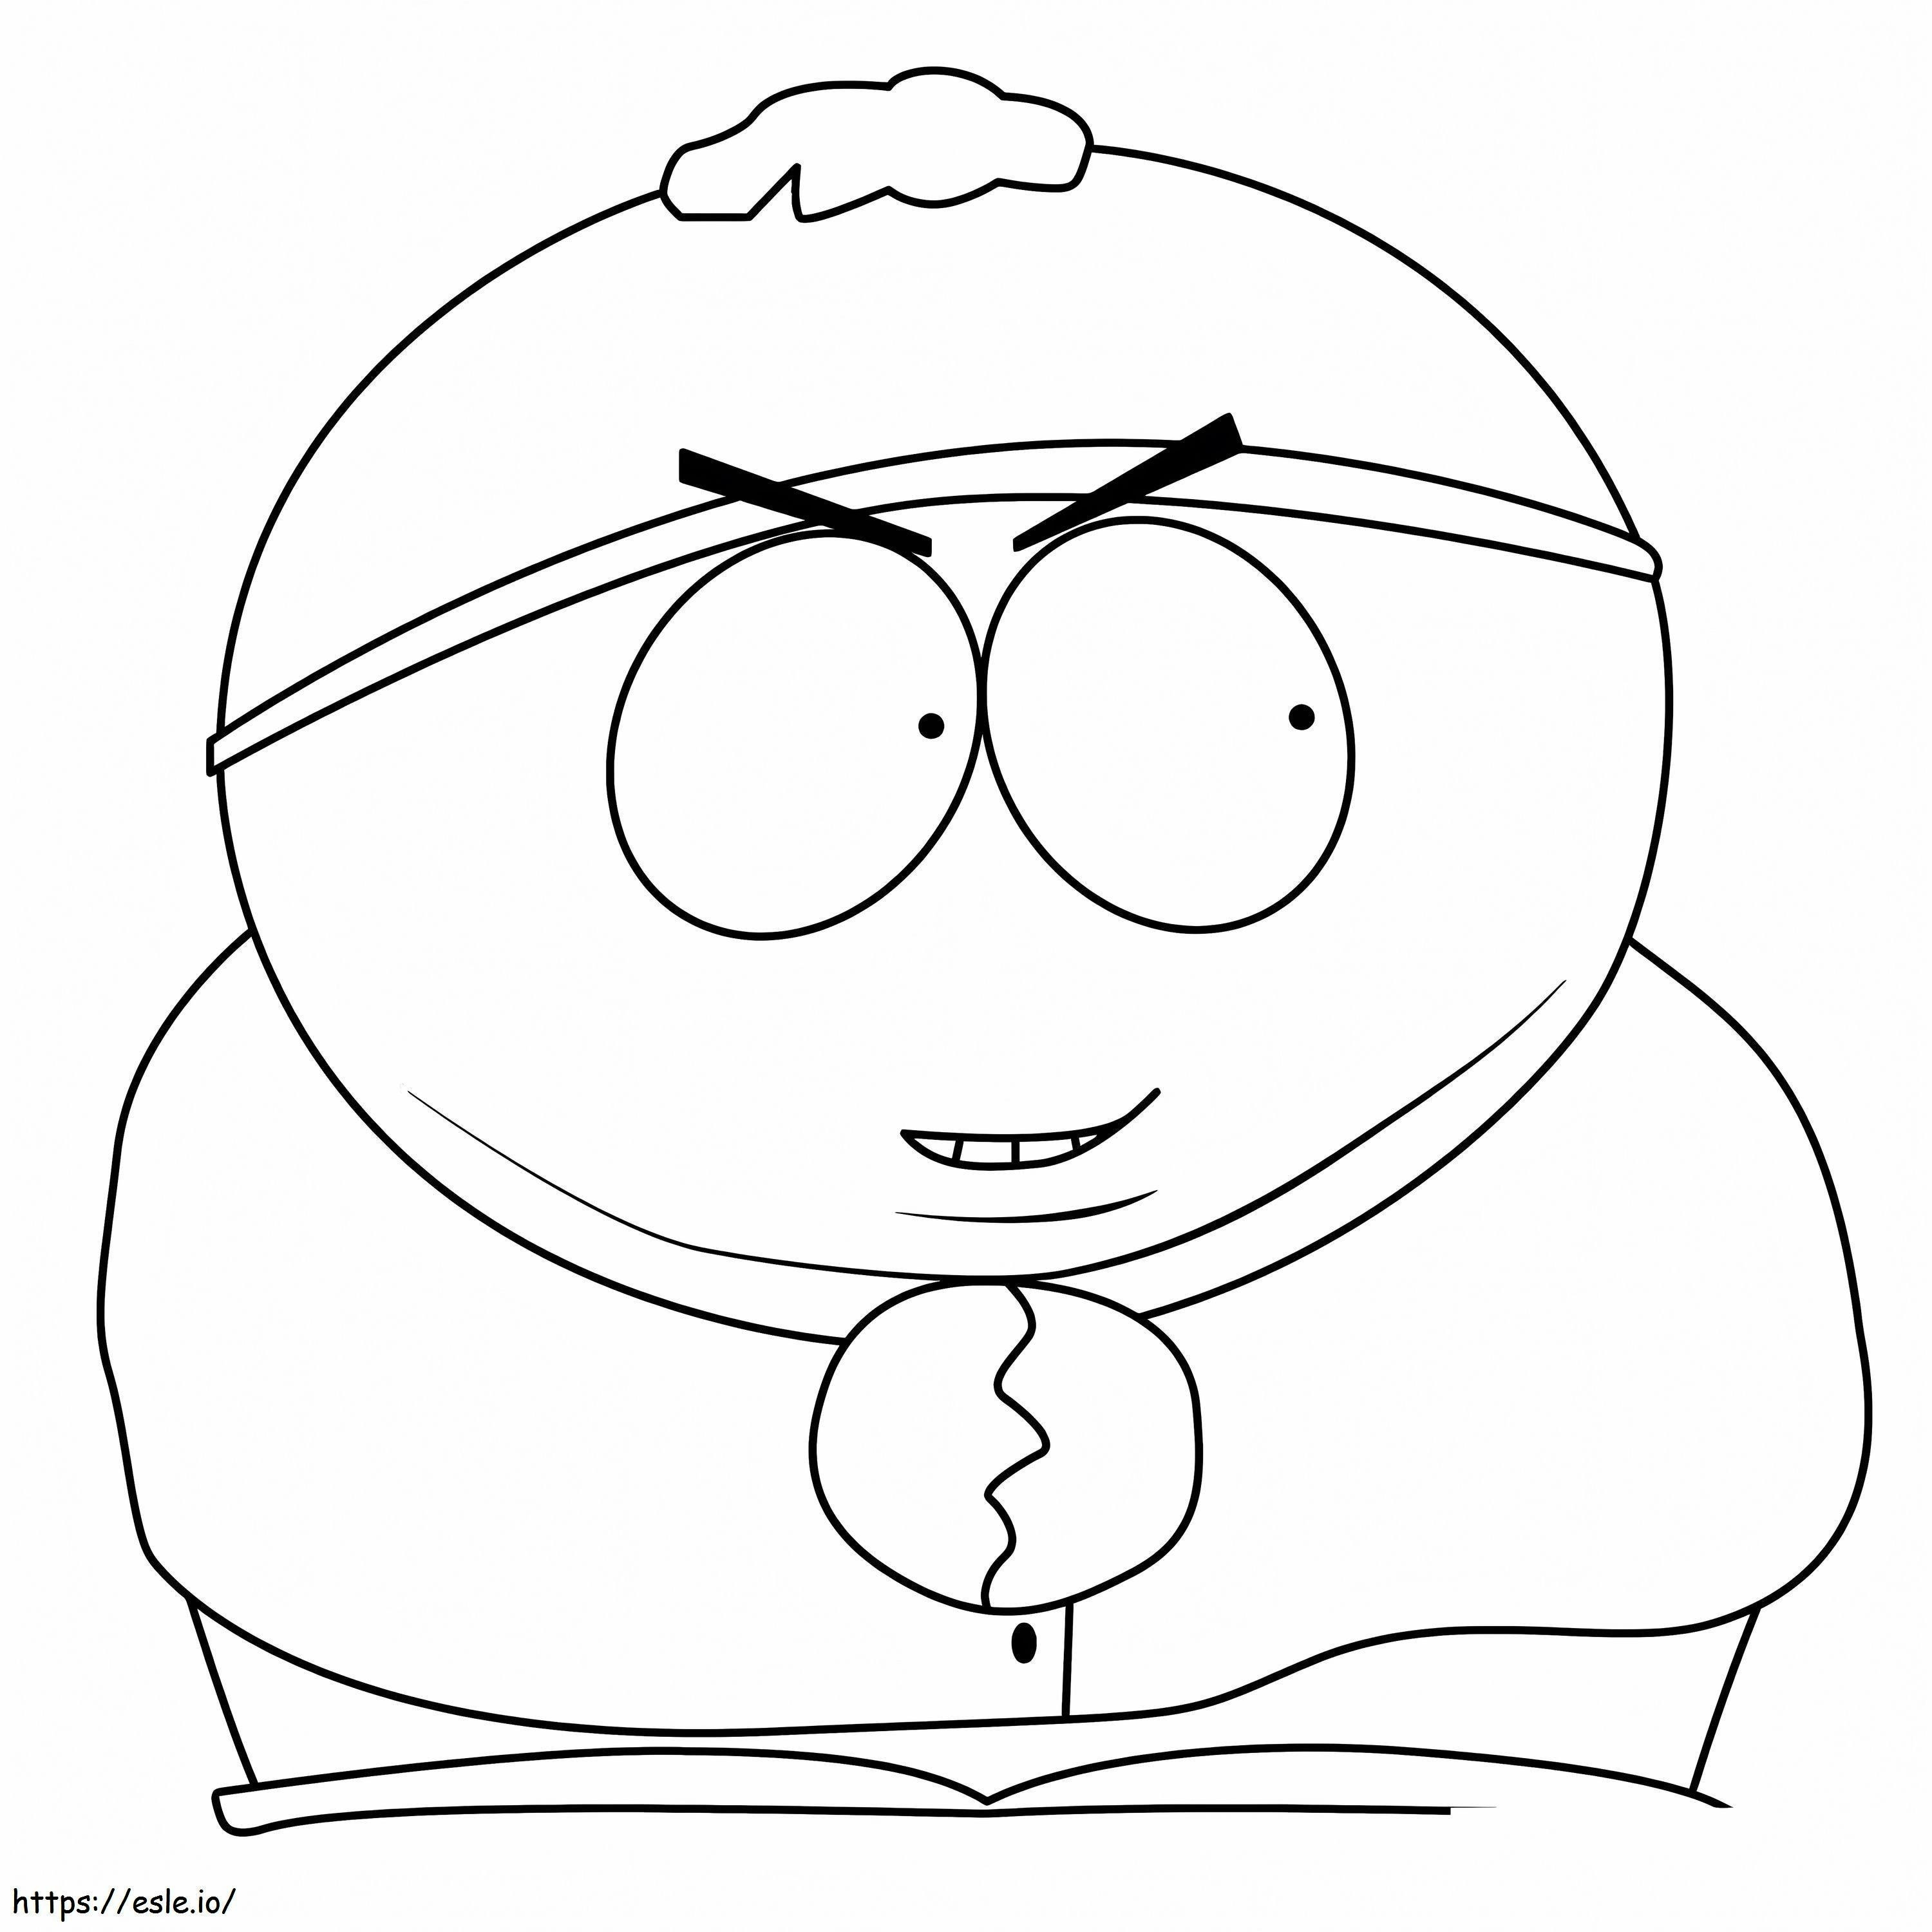 Eric Cartman 3 coloring page